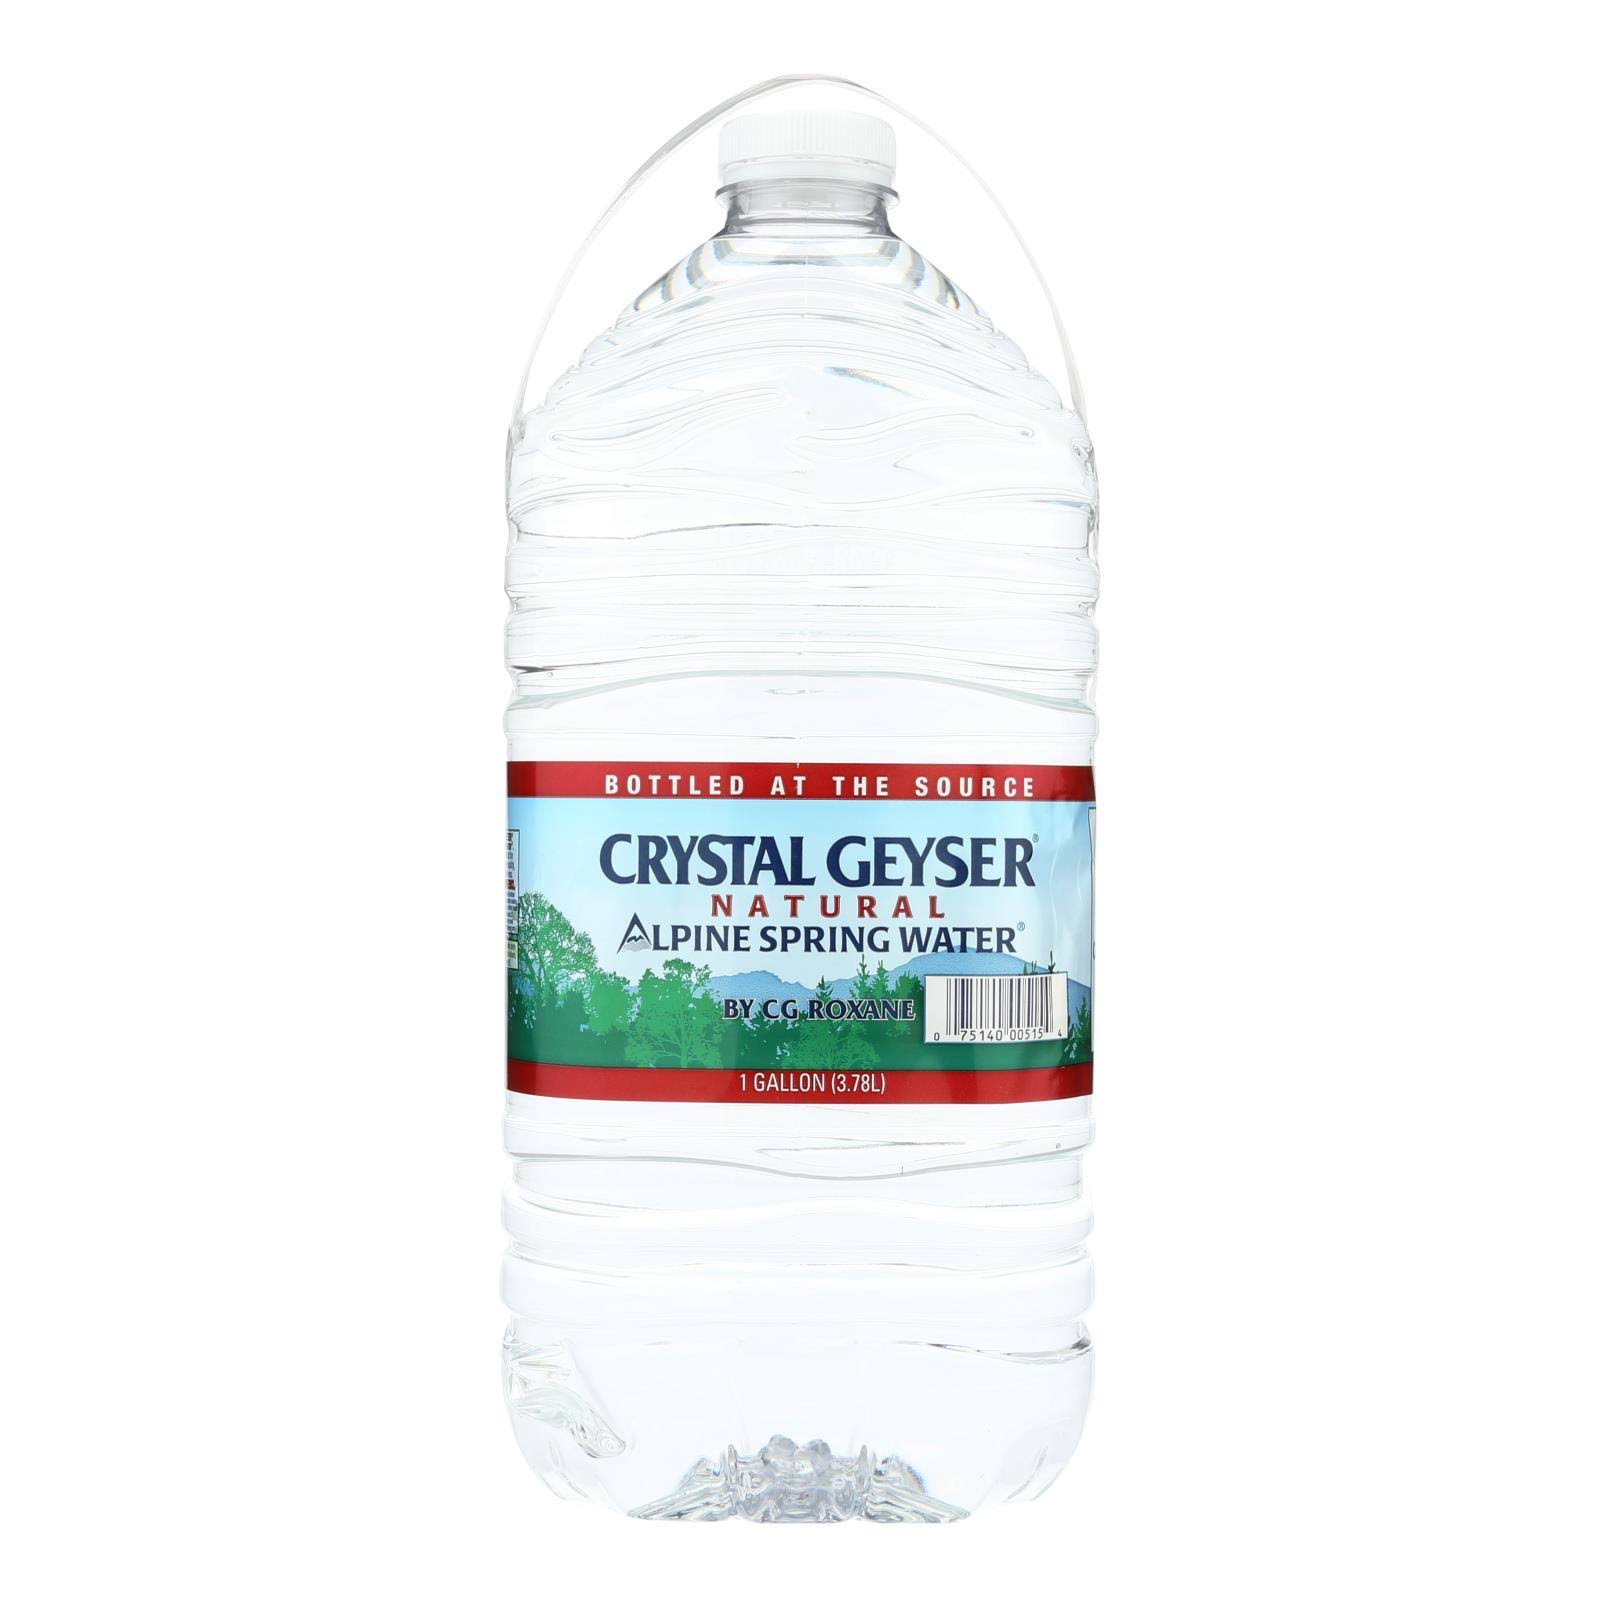 Crystle Geyser Alpine Spring Water - 1 Gallon